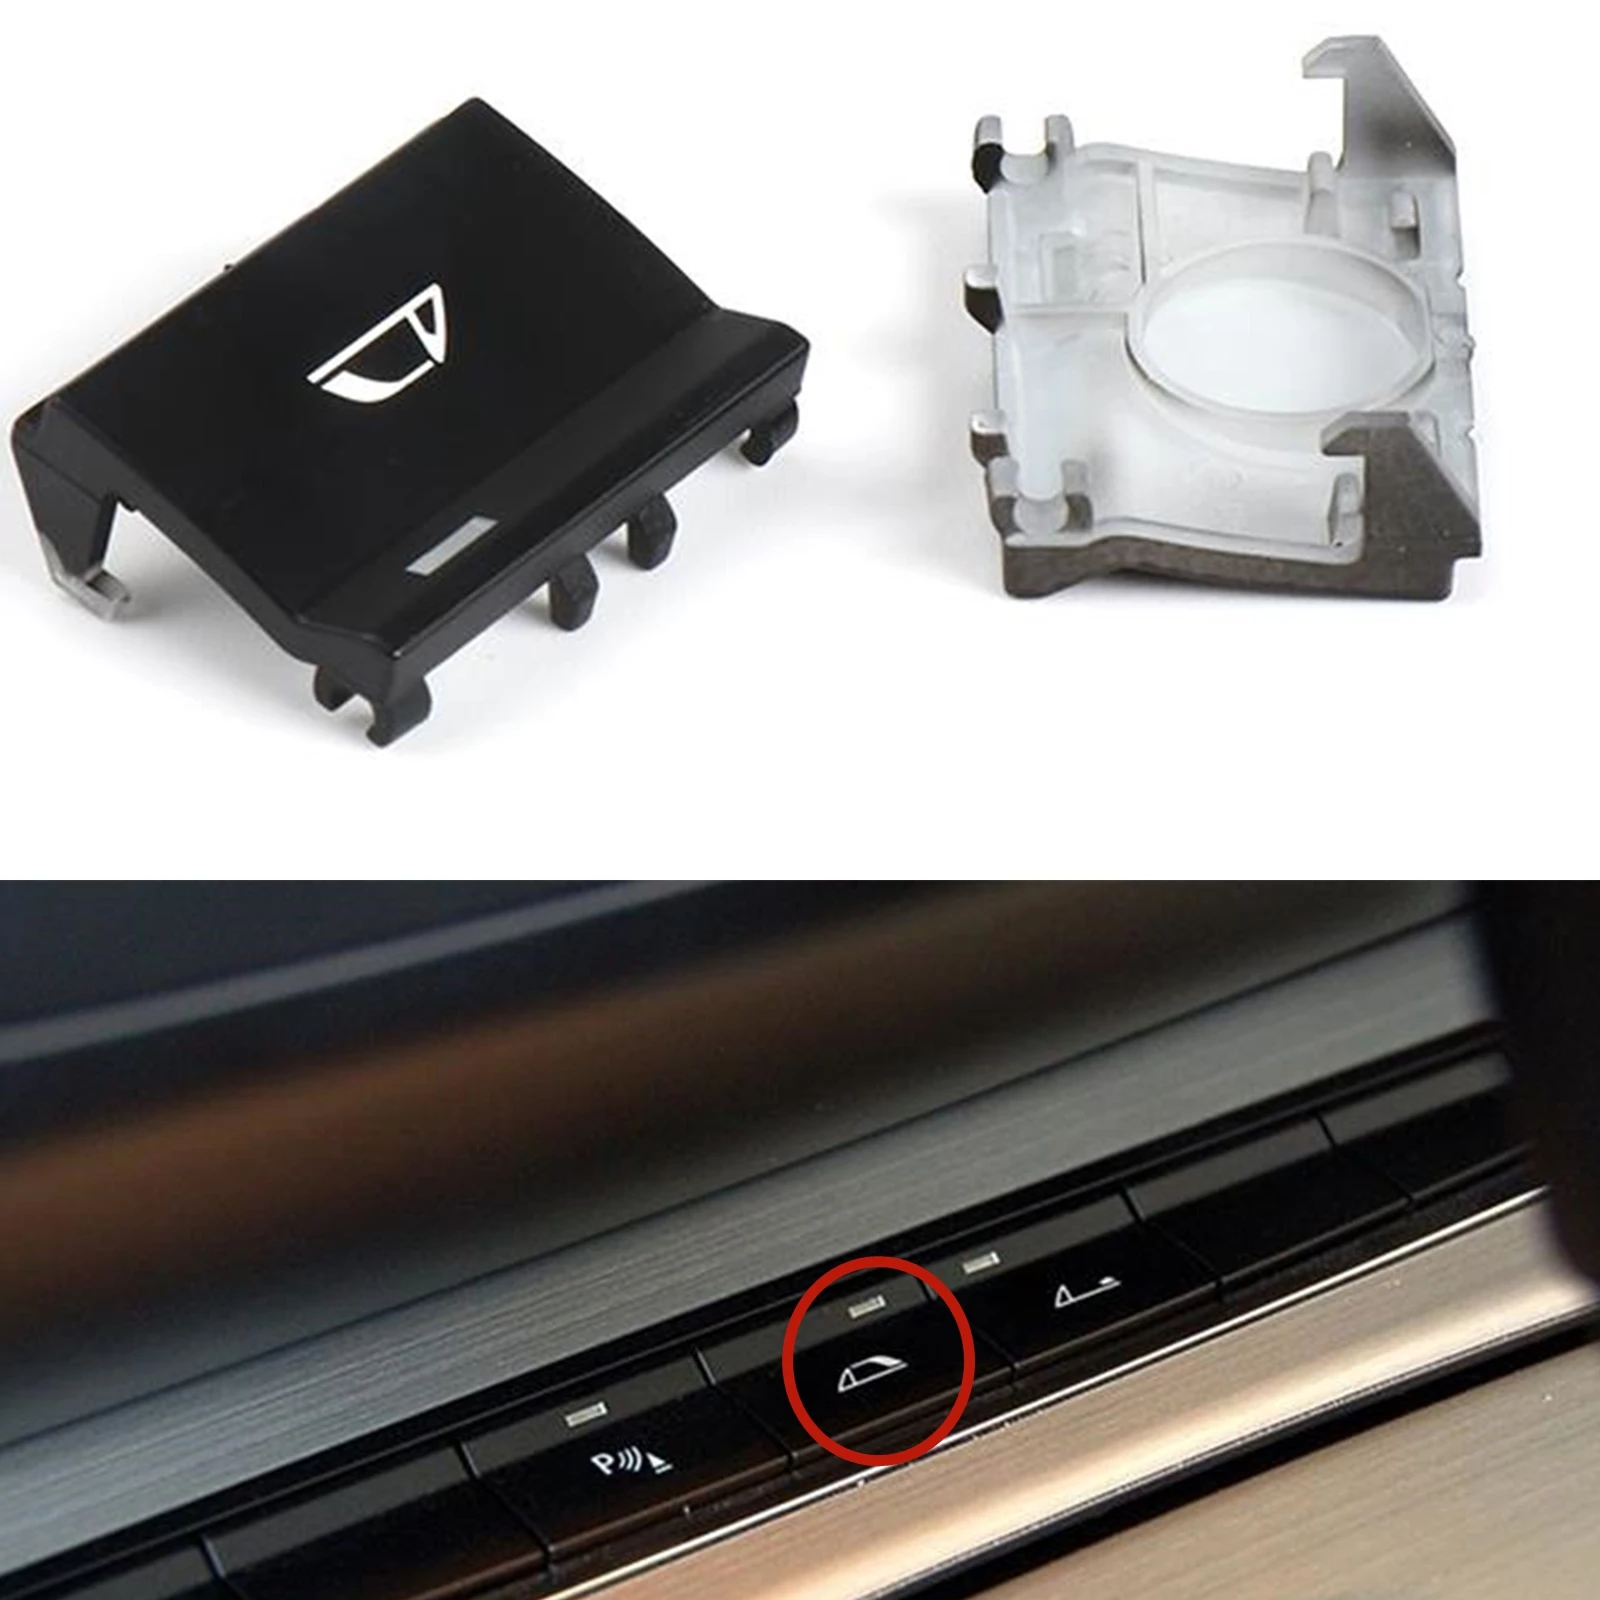 

For BMW Z4 2009-2016 Convertible Lid Car Center Console P Mode Open Close Parking Radar Control Switch Button Cap Key Knob Cover